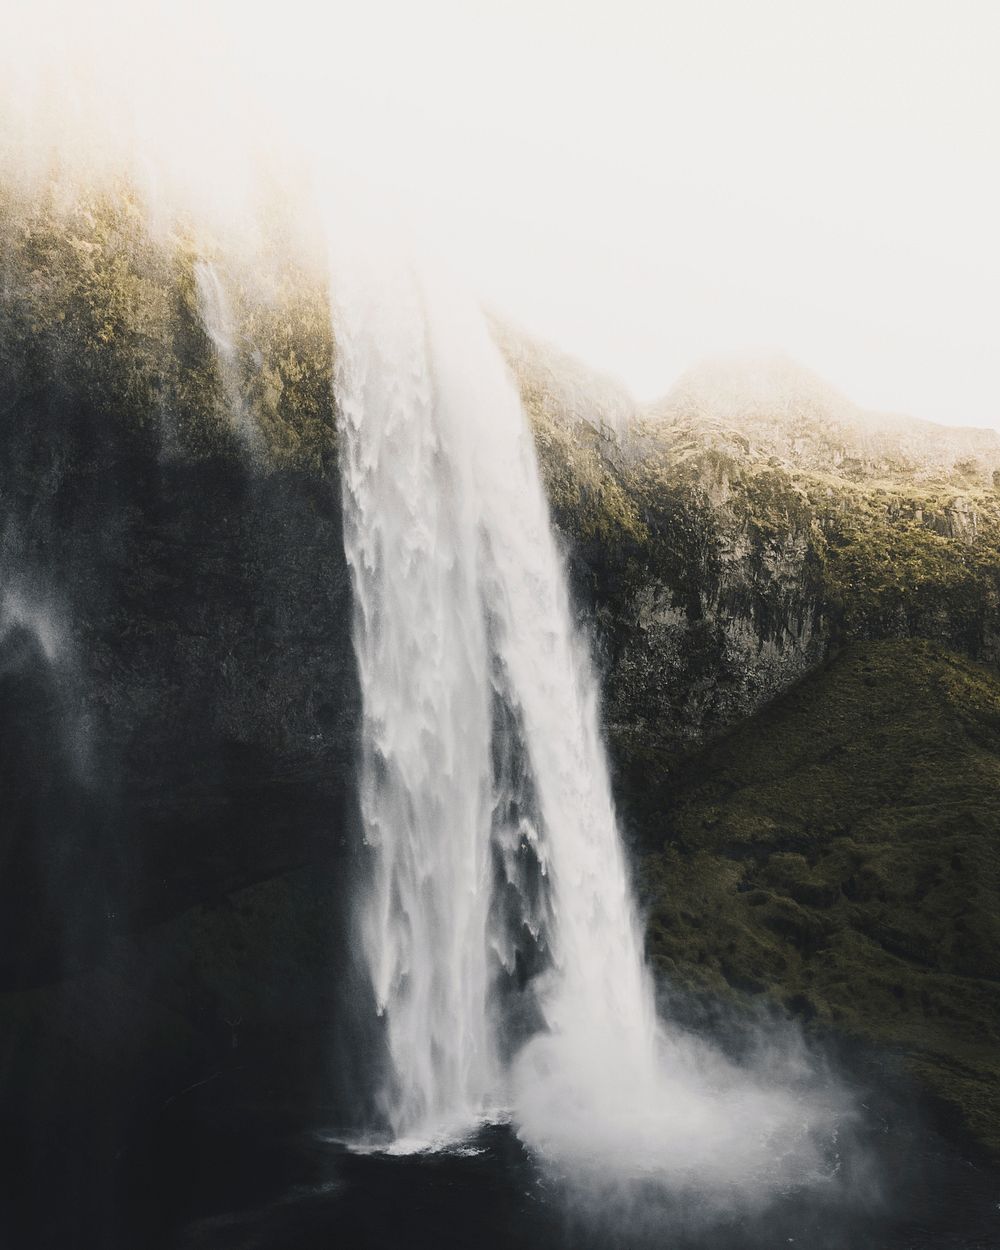 Skogafoss waterfall in the Icelandic nature